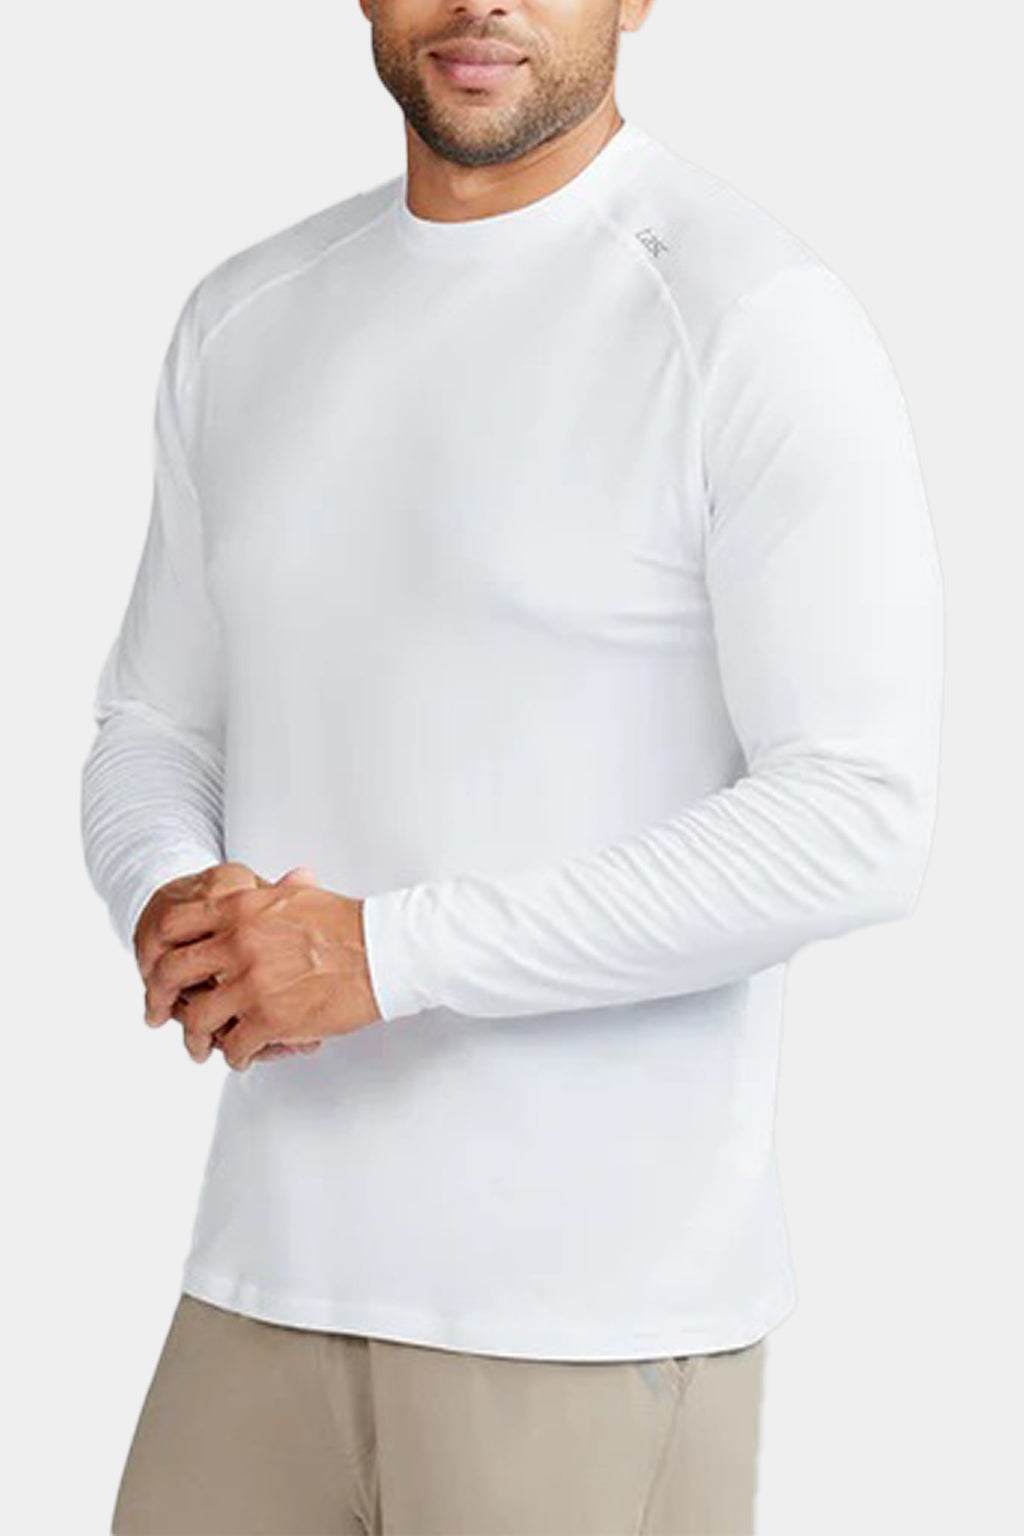 Tasc - Carrollton Long Sleeve Fitness T-shirt